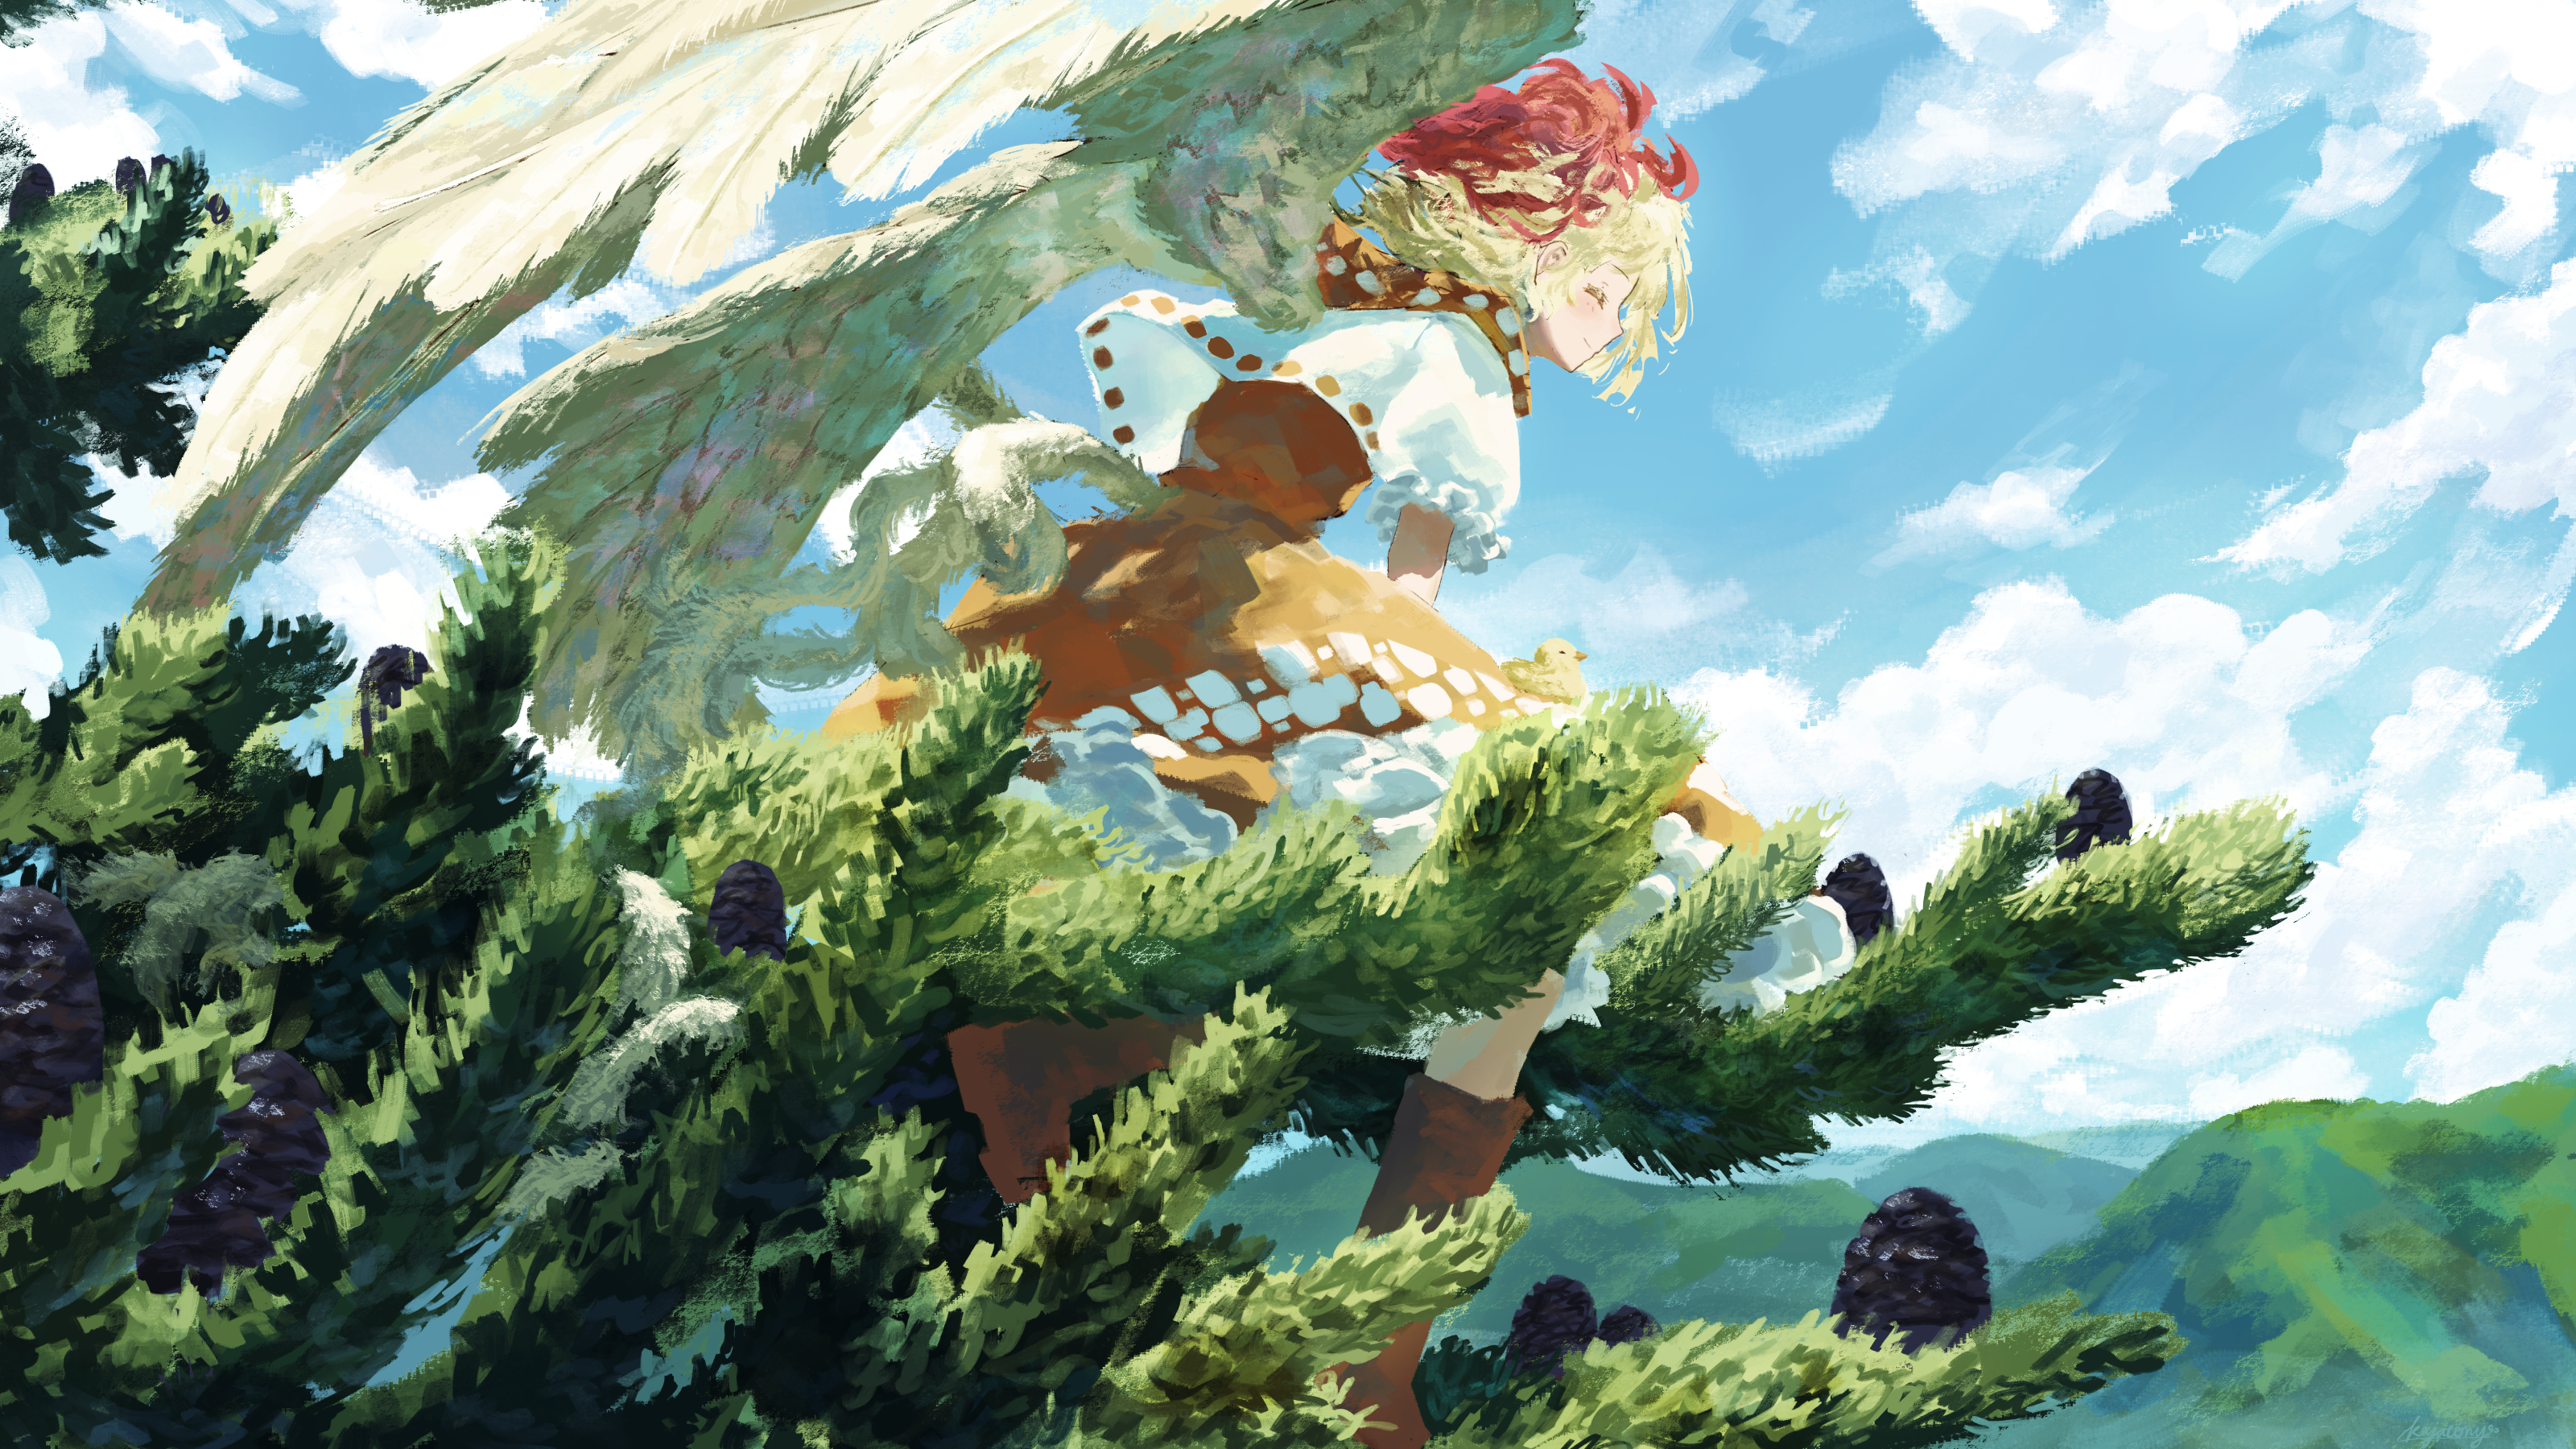 Anime 3200x1800 Touhou scenery landscape bright wings kutaka niwatari dress forest clouds oil painting Pixiv hills